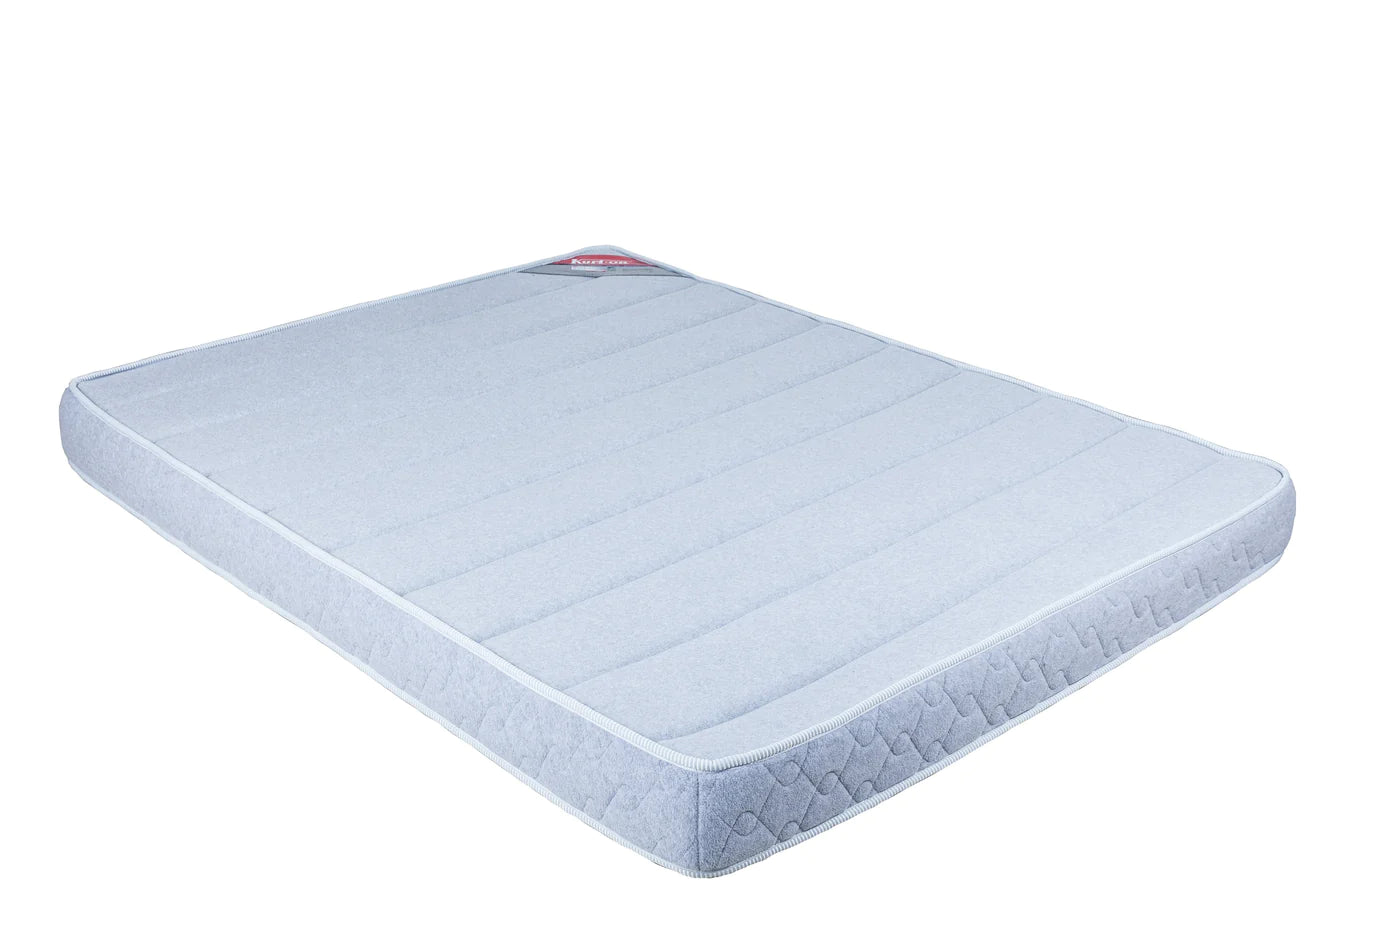 Spinekare mattress